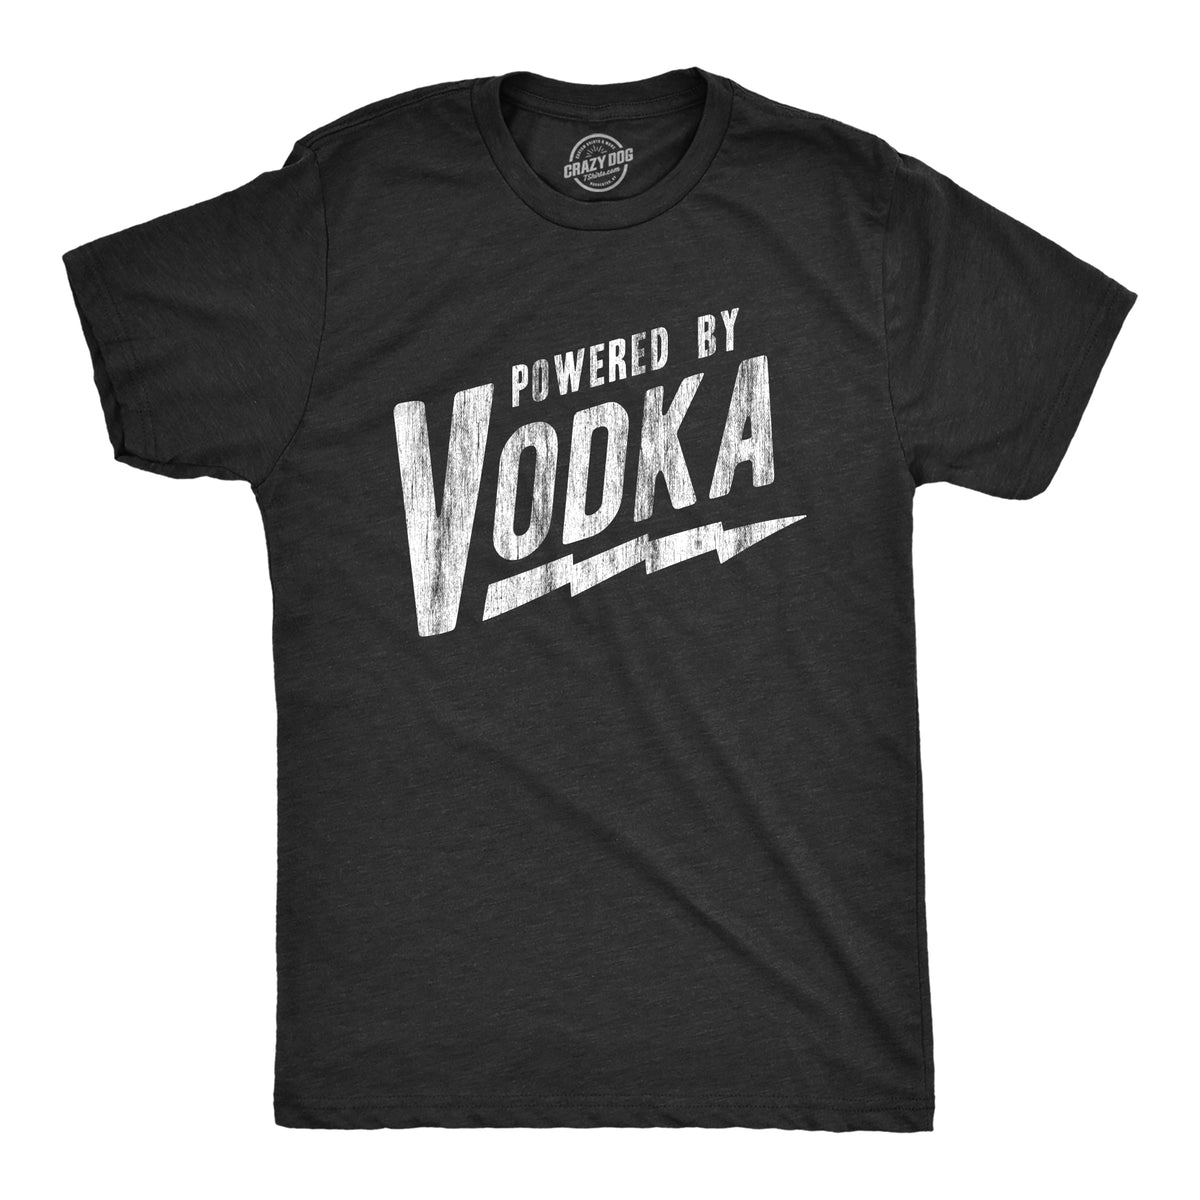 Funny Heather Black - VODKA Powered By Vodka Mens T Shirt Nerdy Drinking liquor Tee